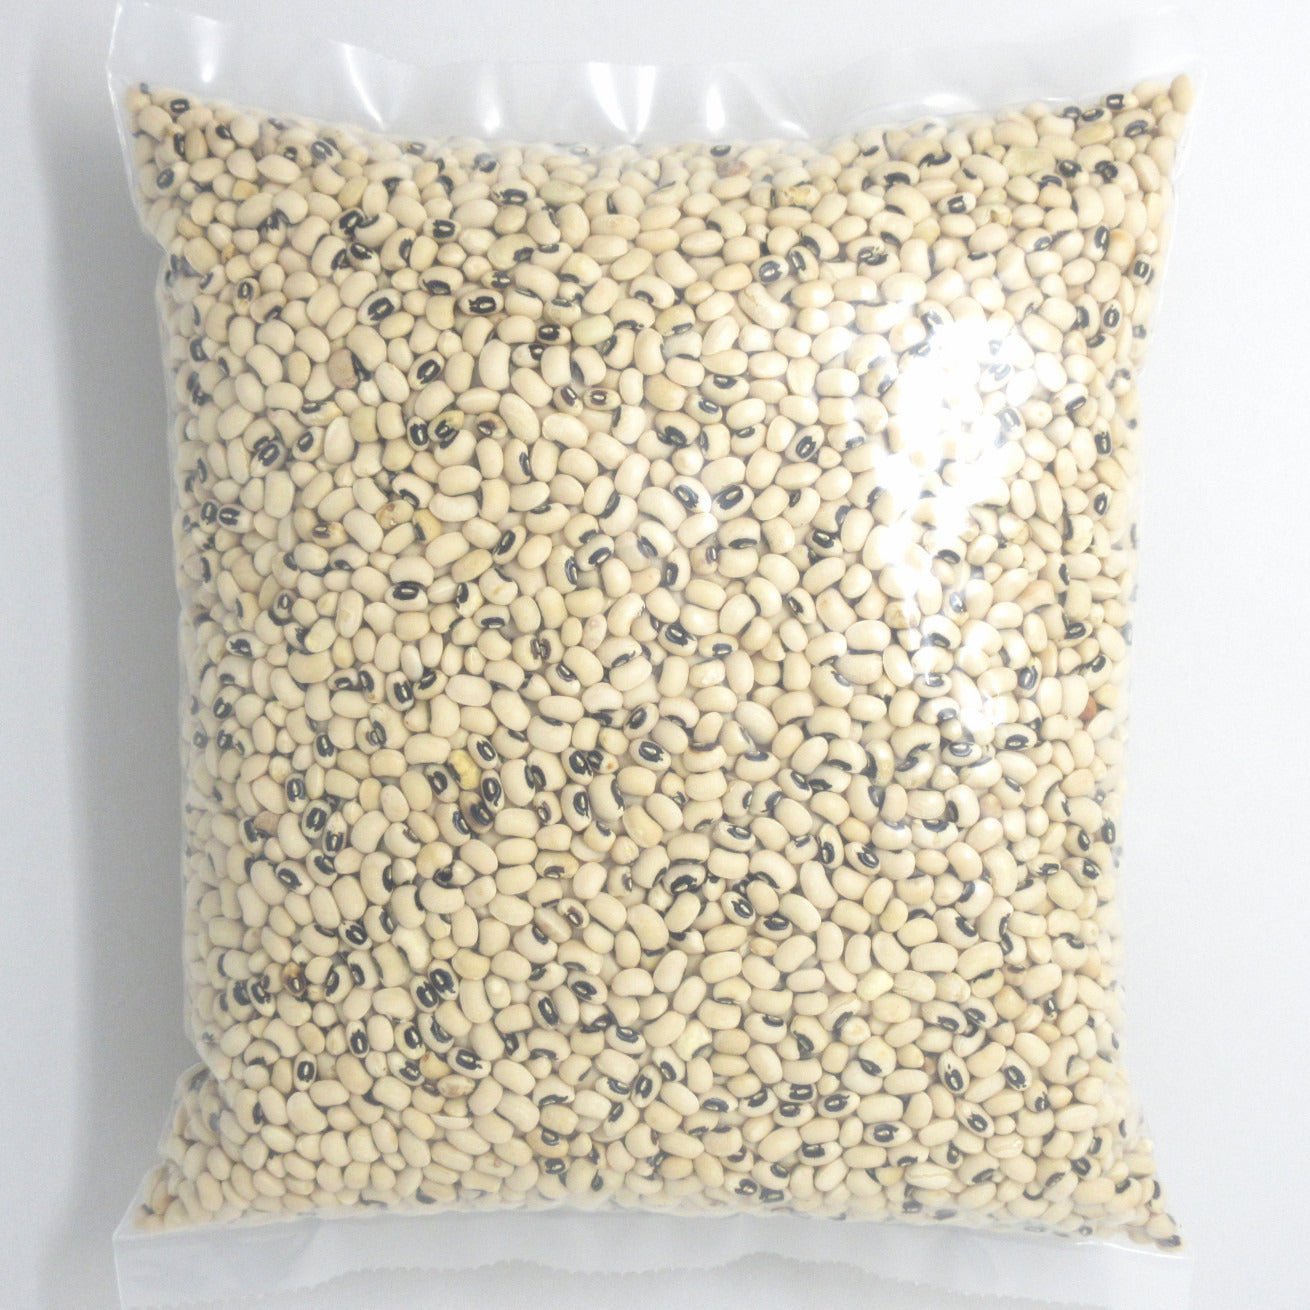 Flour Barrel product image - Black Eye Peas